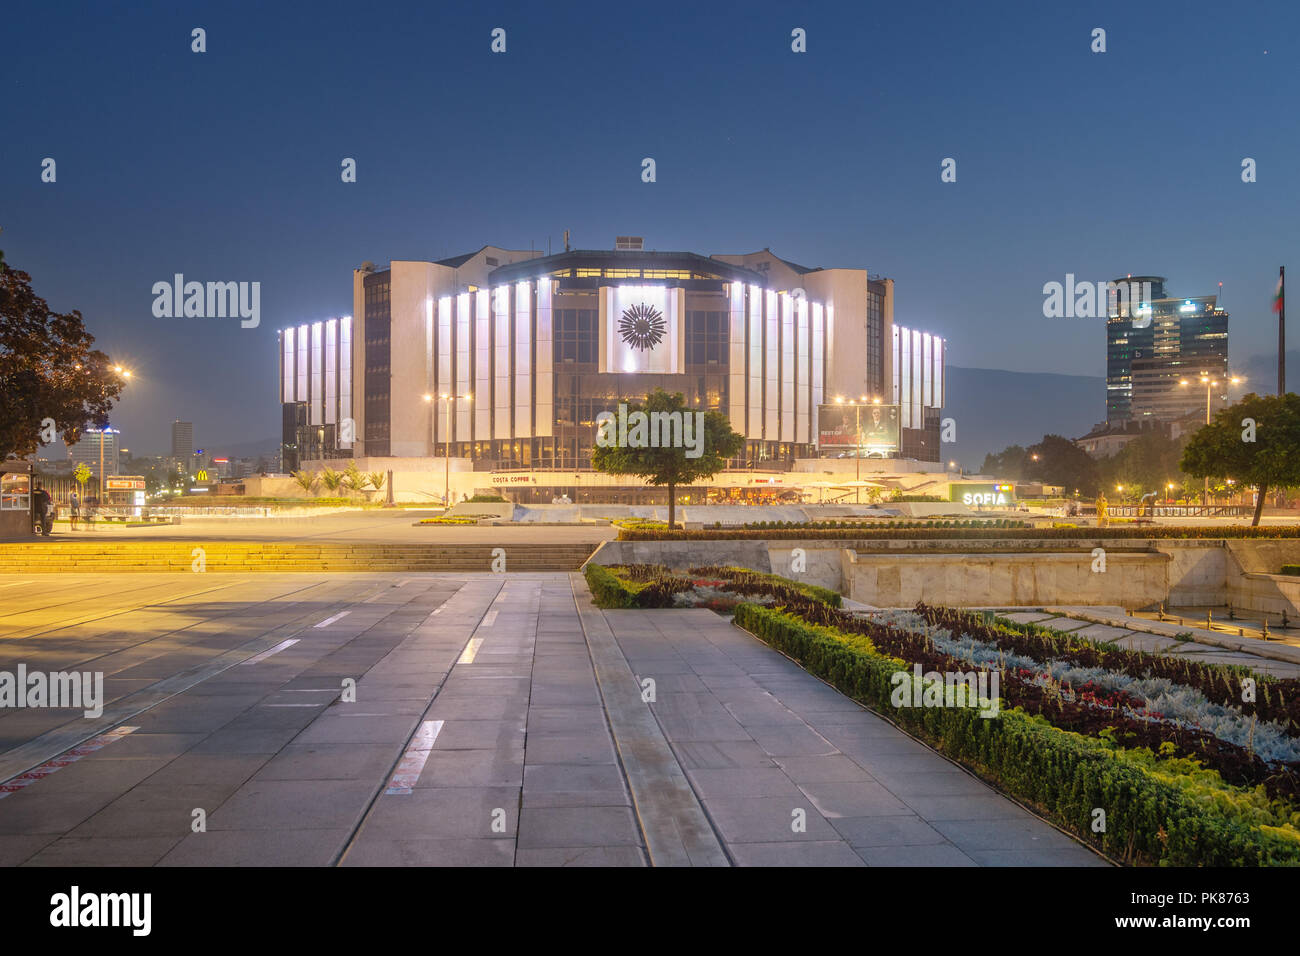 National Palace of Culture, Sofia - Bulgaria Stock Photo